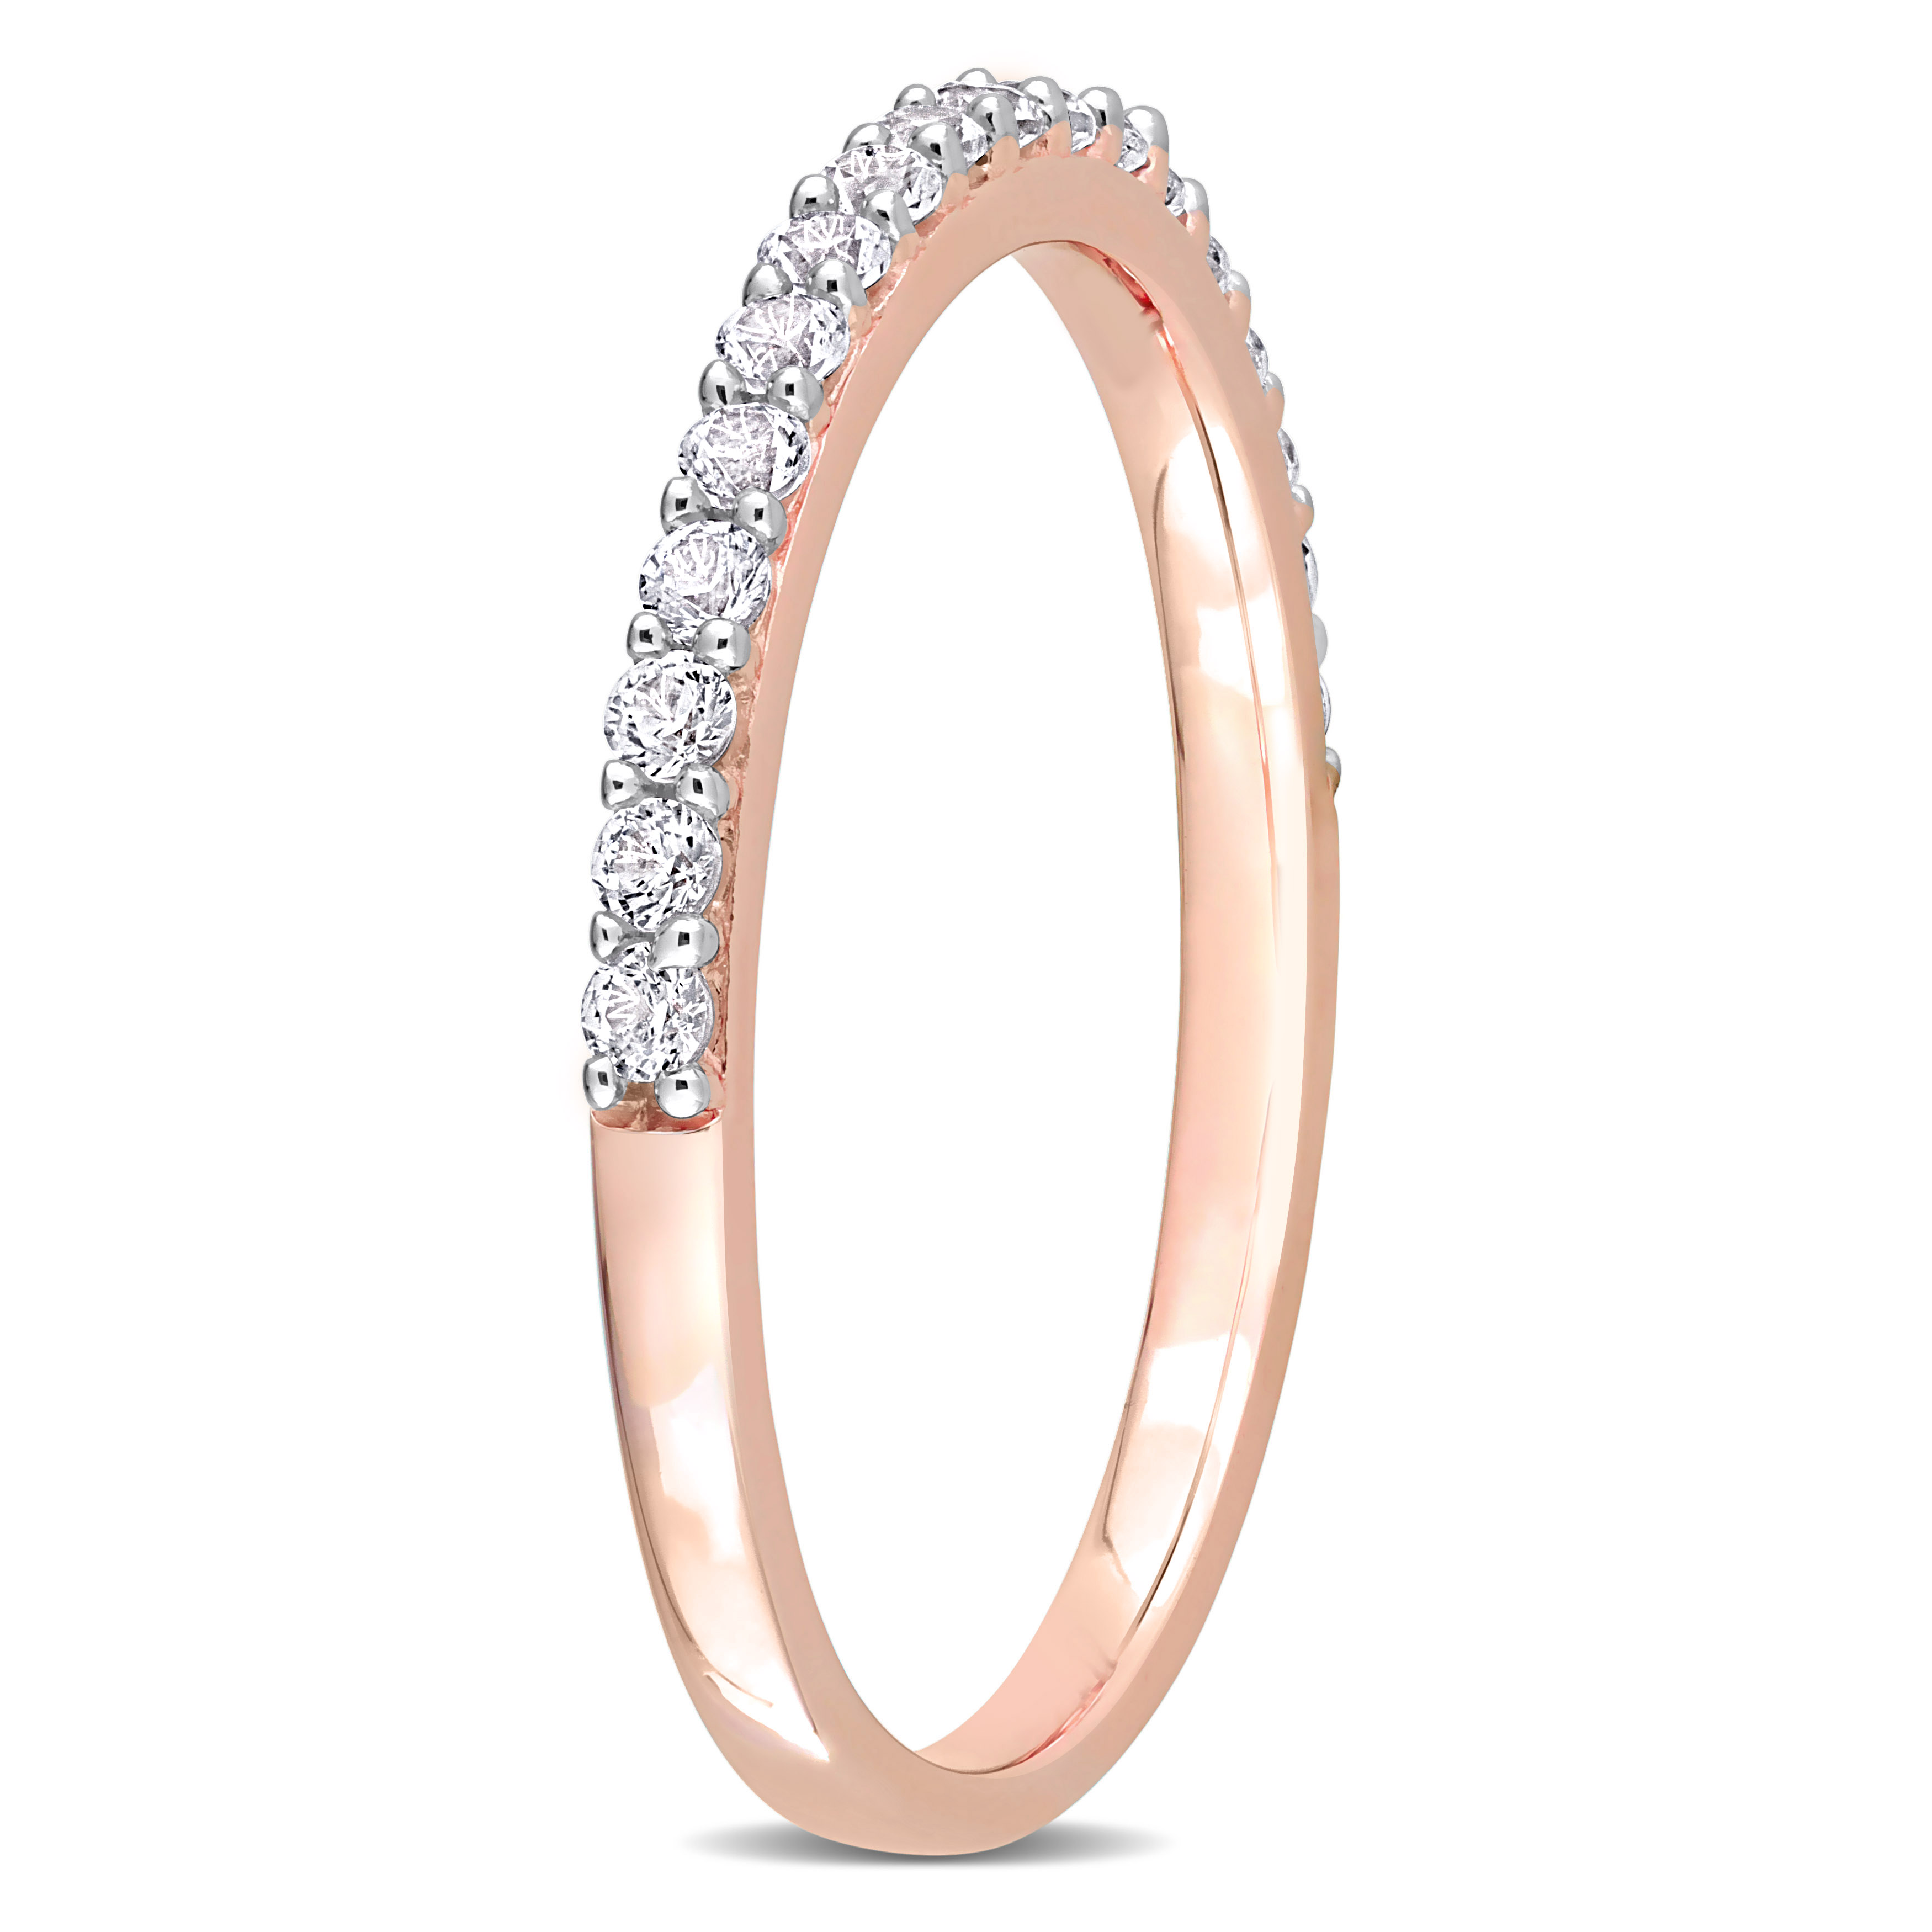 3/8 CT TGW Created White Sapphire Semi-Eternity Ring in 10k Rose Gold